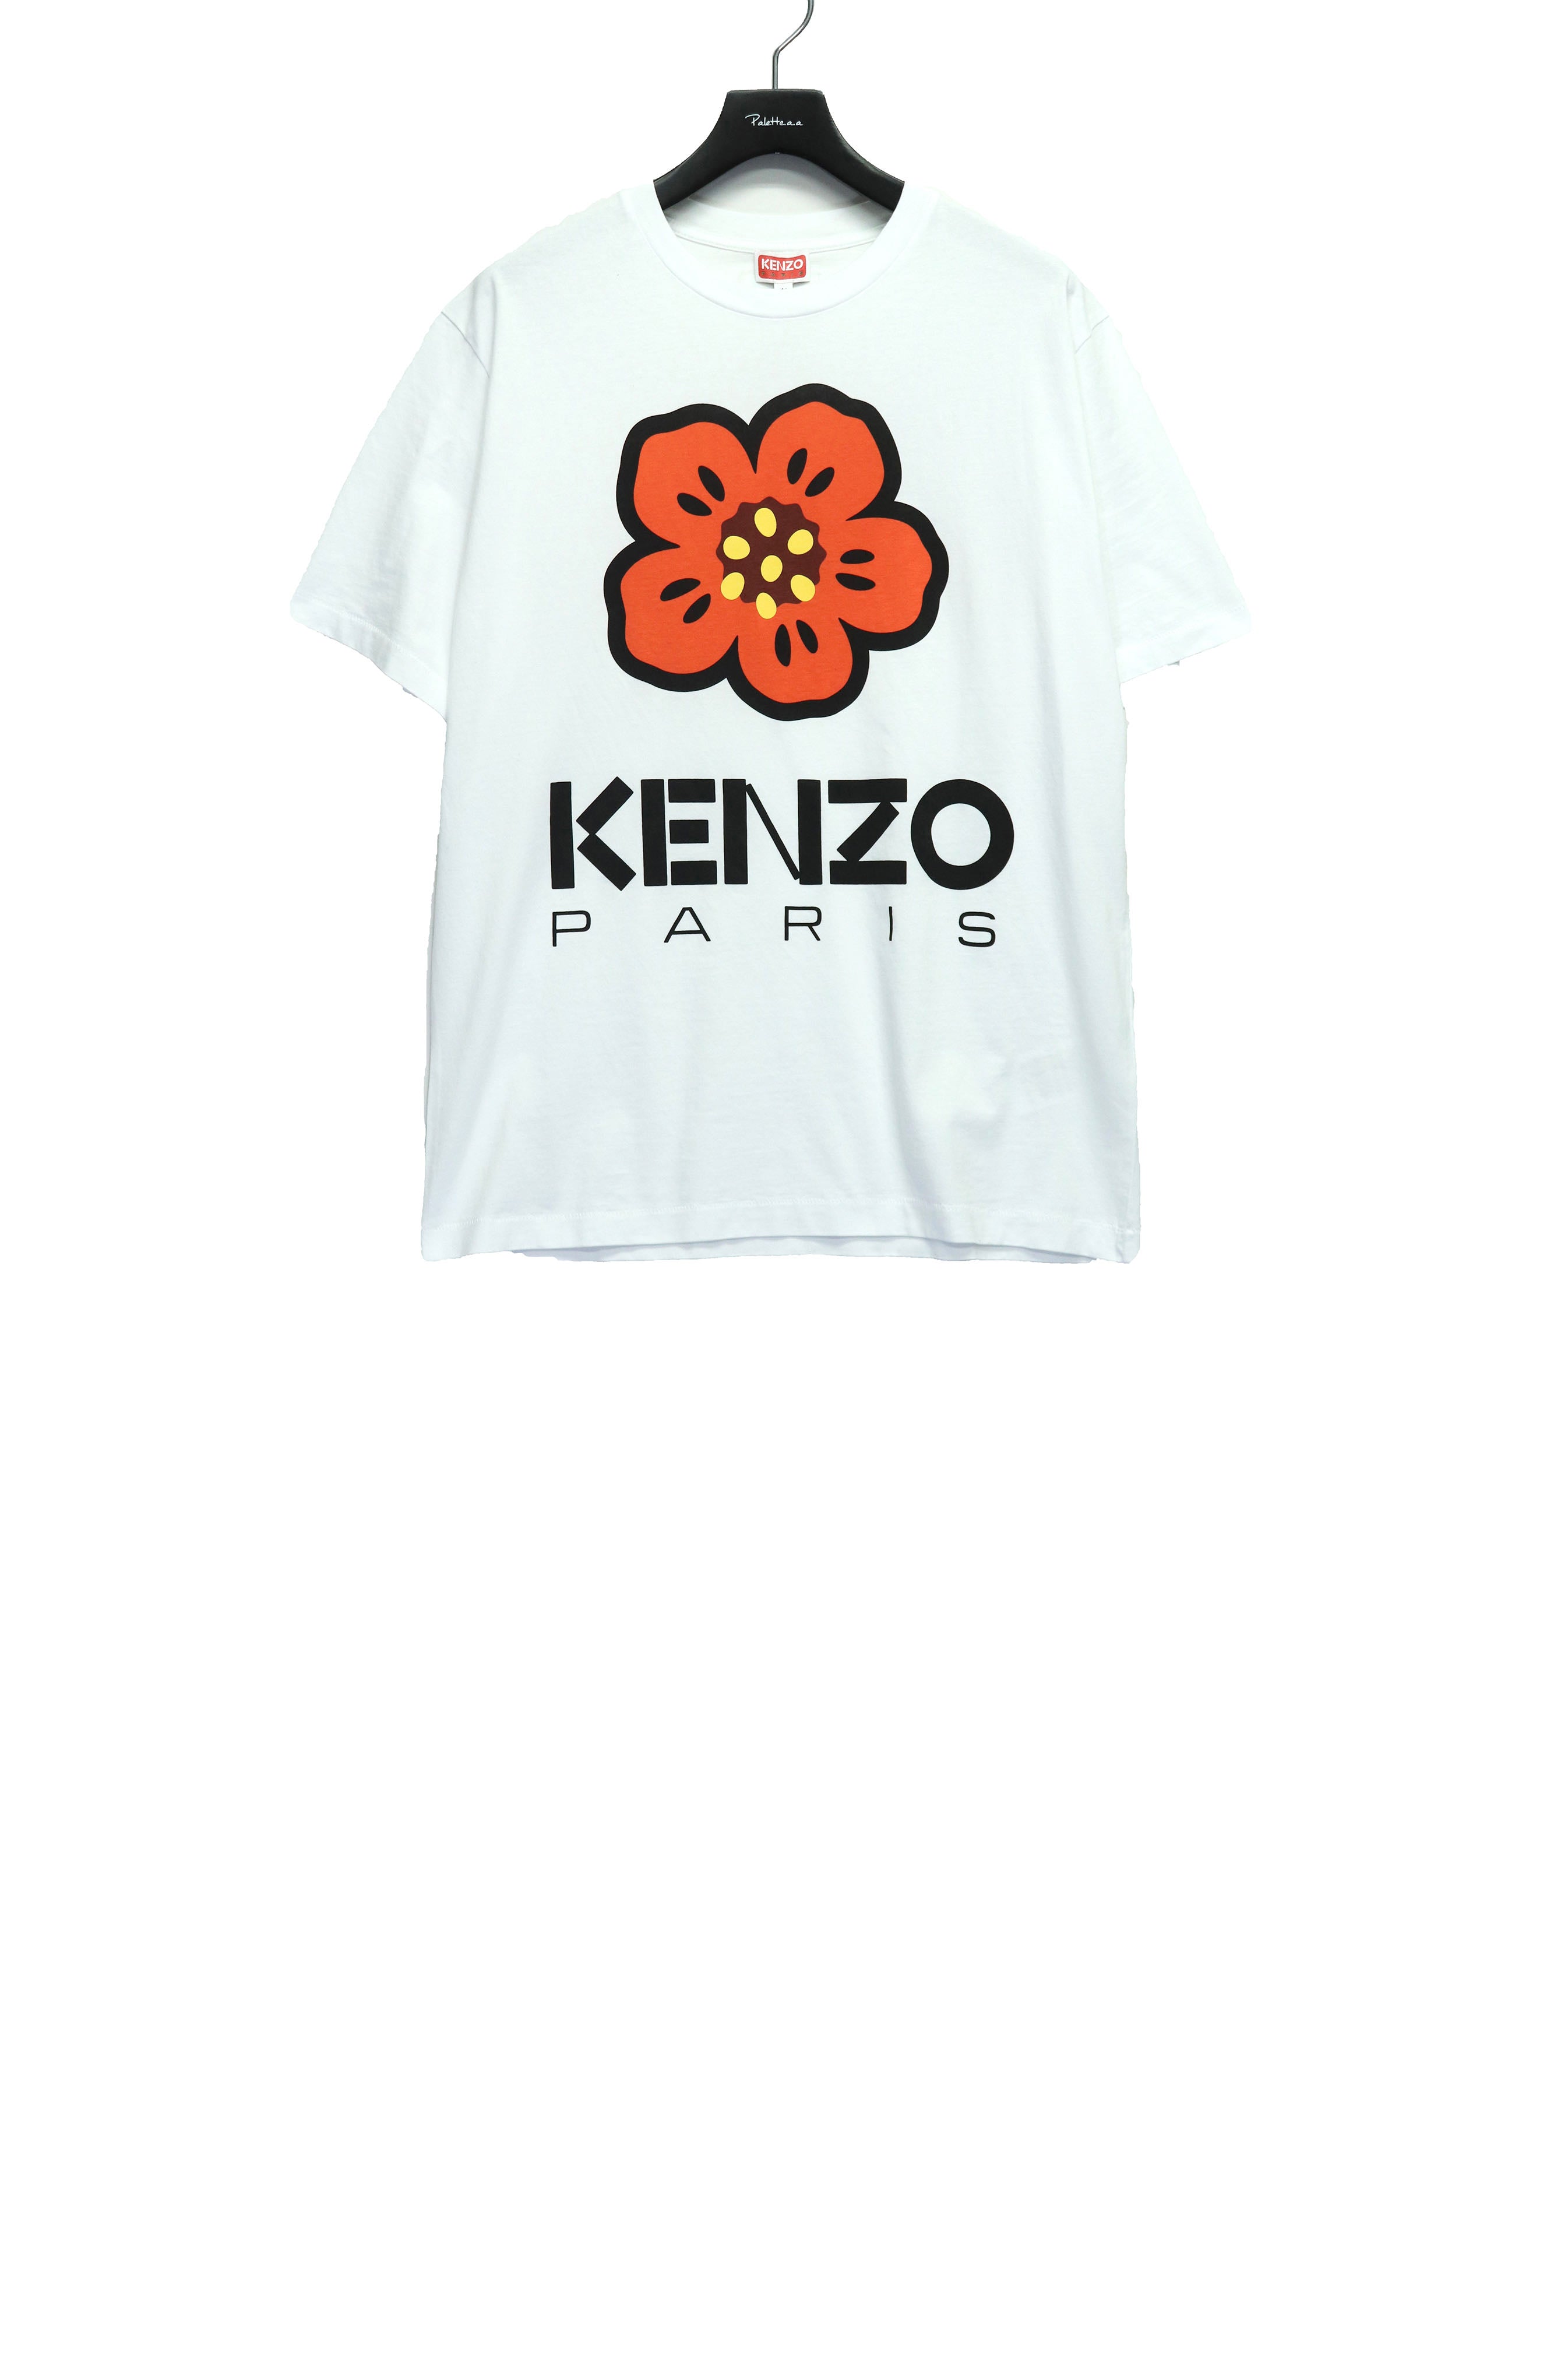 KENZO(ケンゾー)のBOKE FLOWER CLASSIC T-SHIRT-2 WHITEの通販